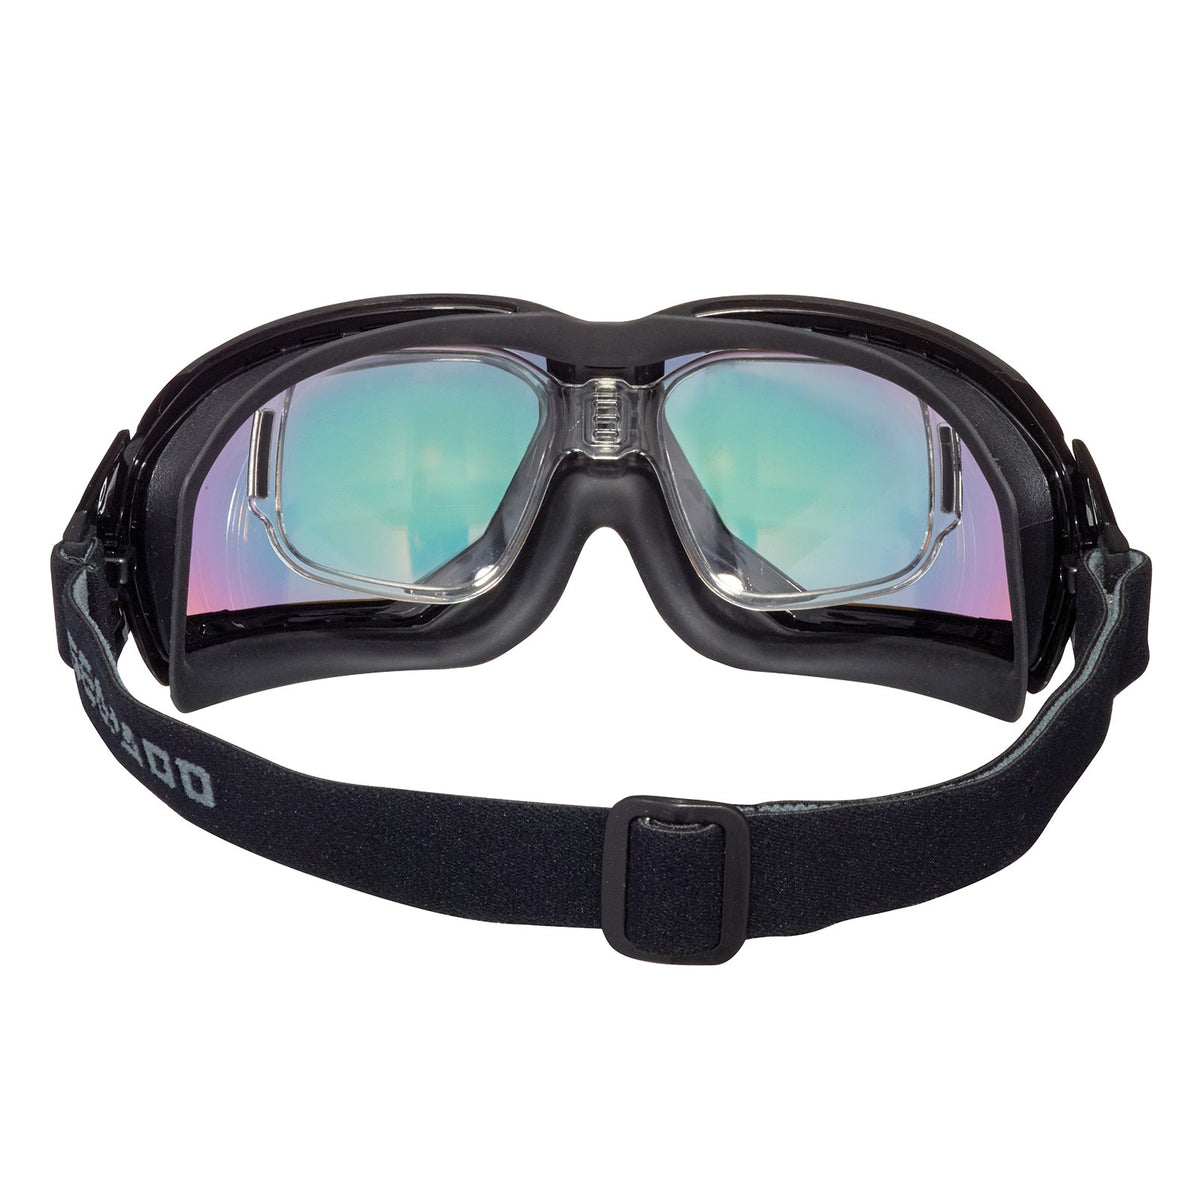 Sea-Doo Riding Goggles RX Insert